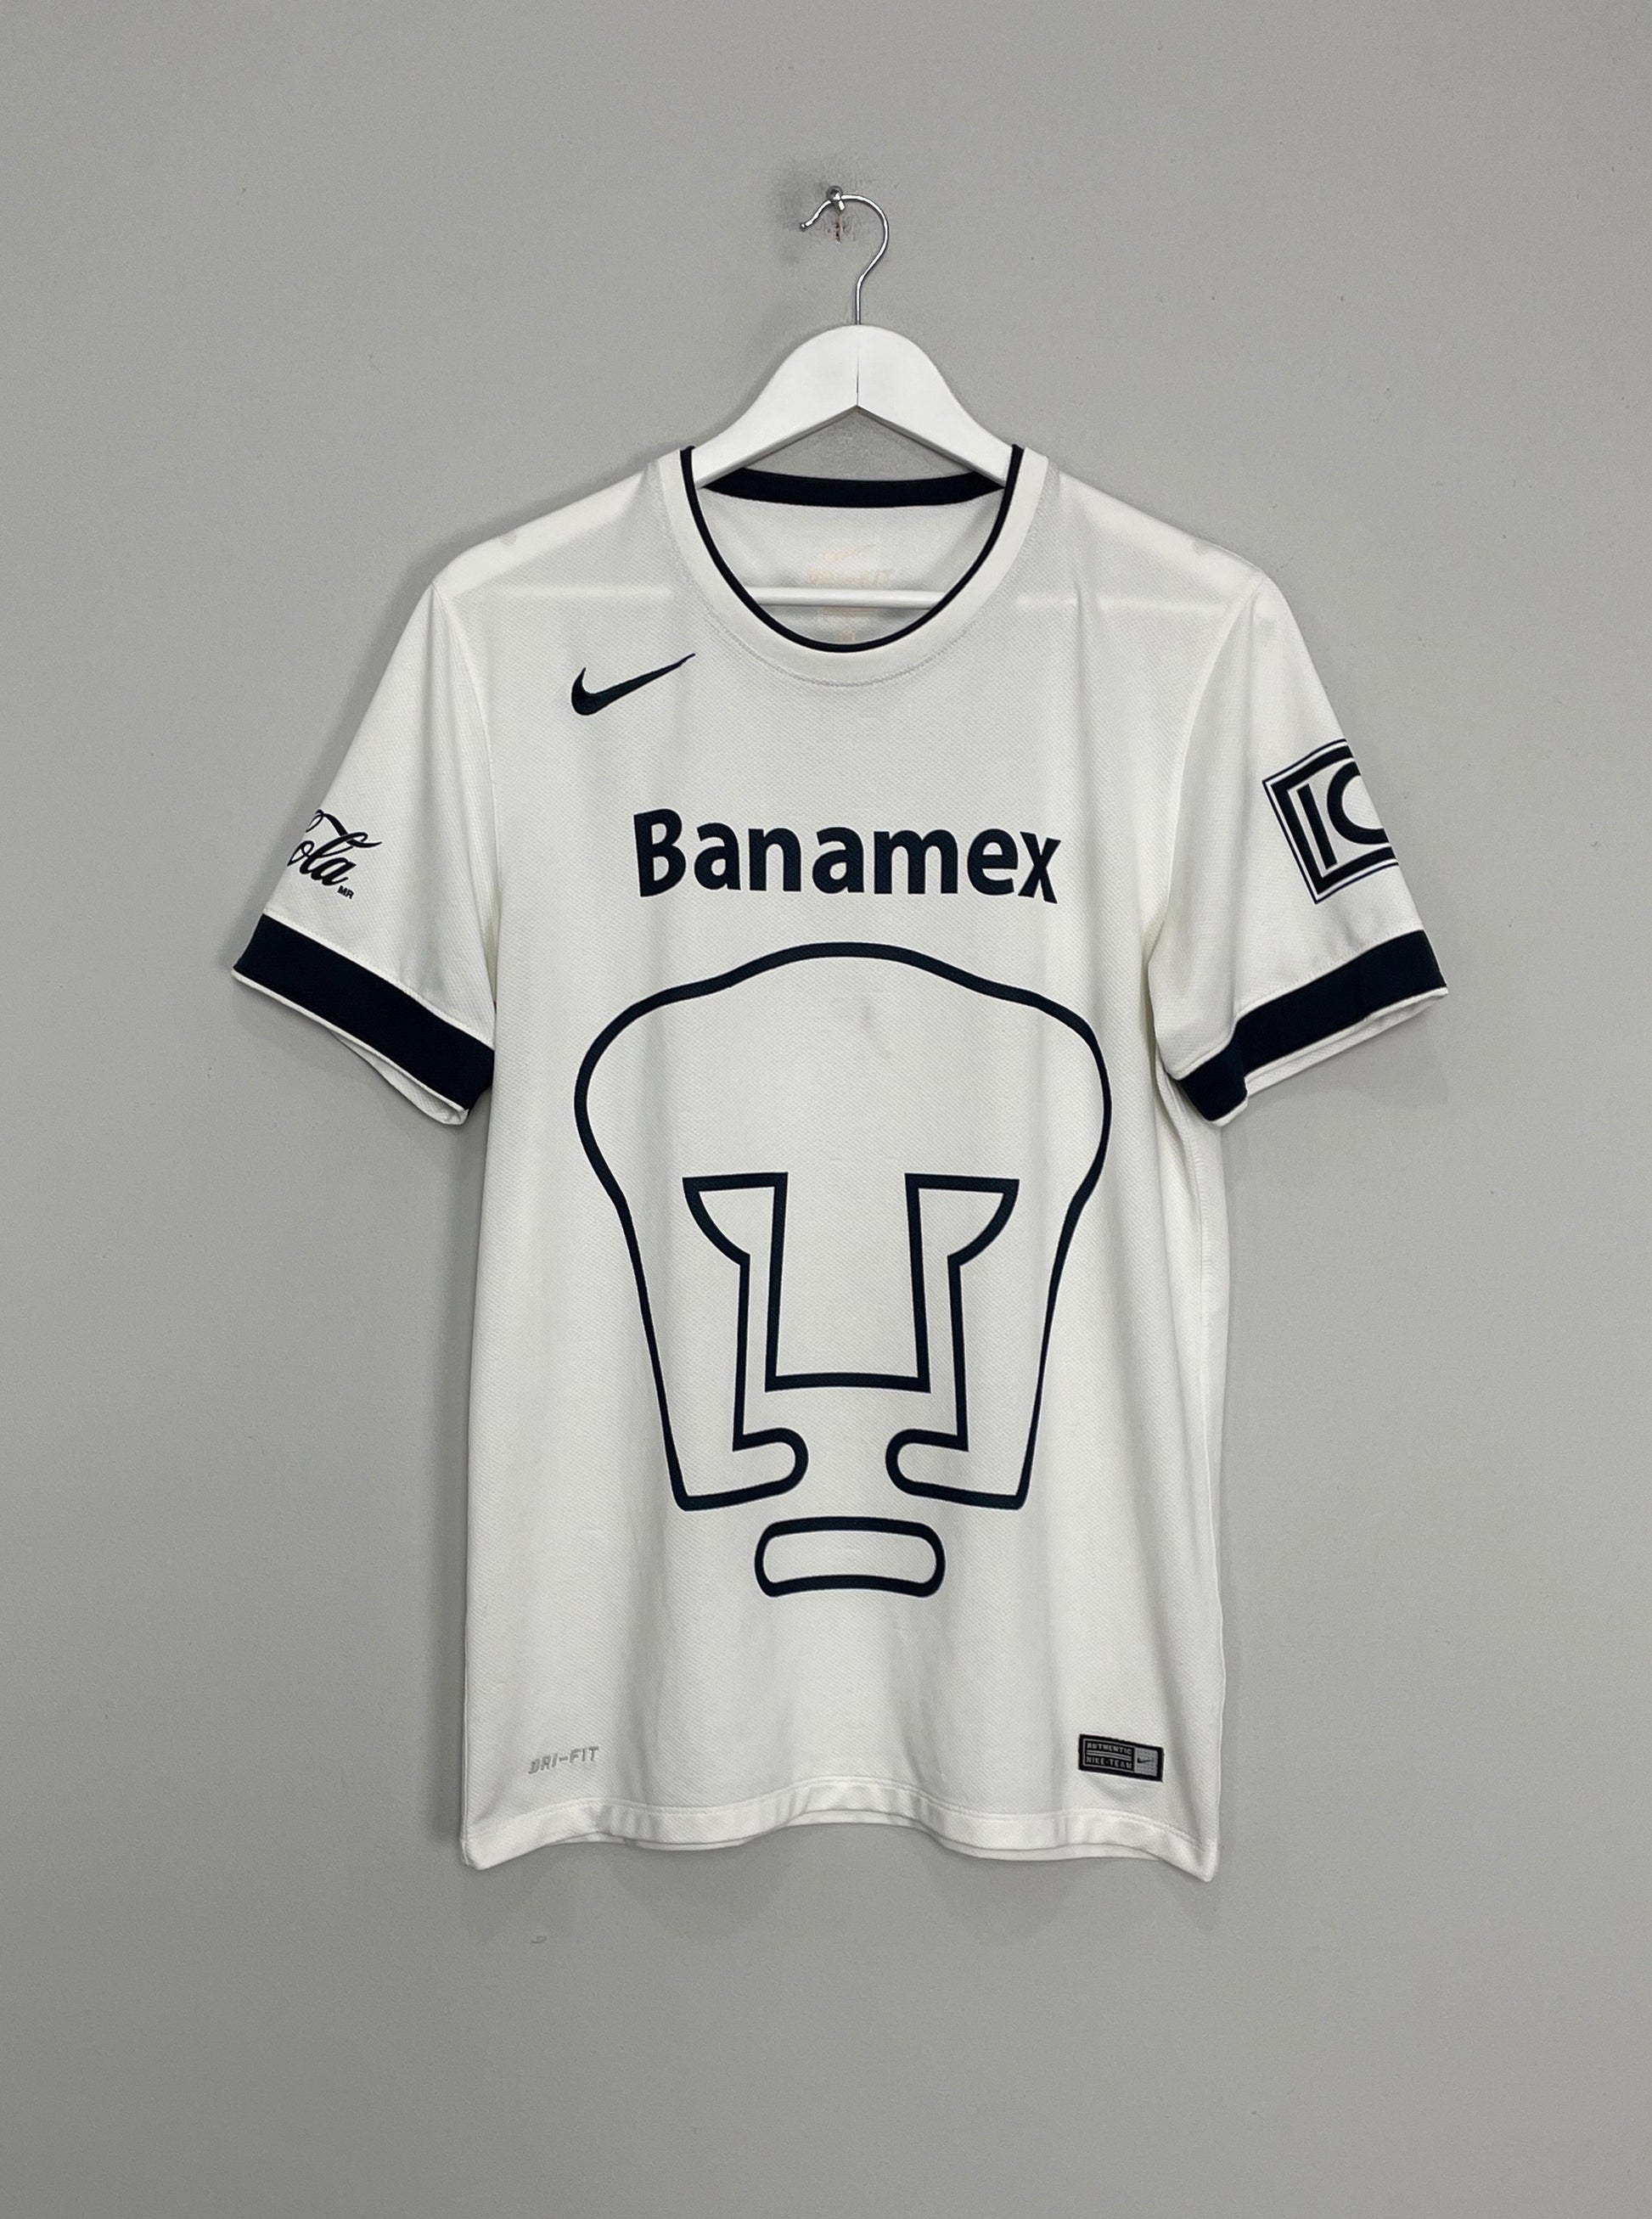 Image of the Unam Pumas shirt from the 2014/15 season